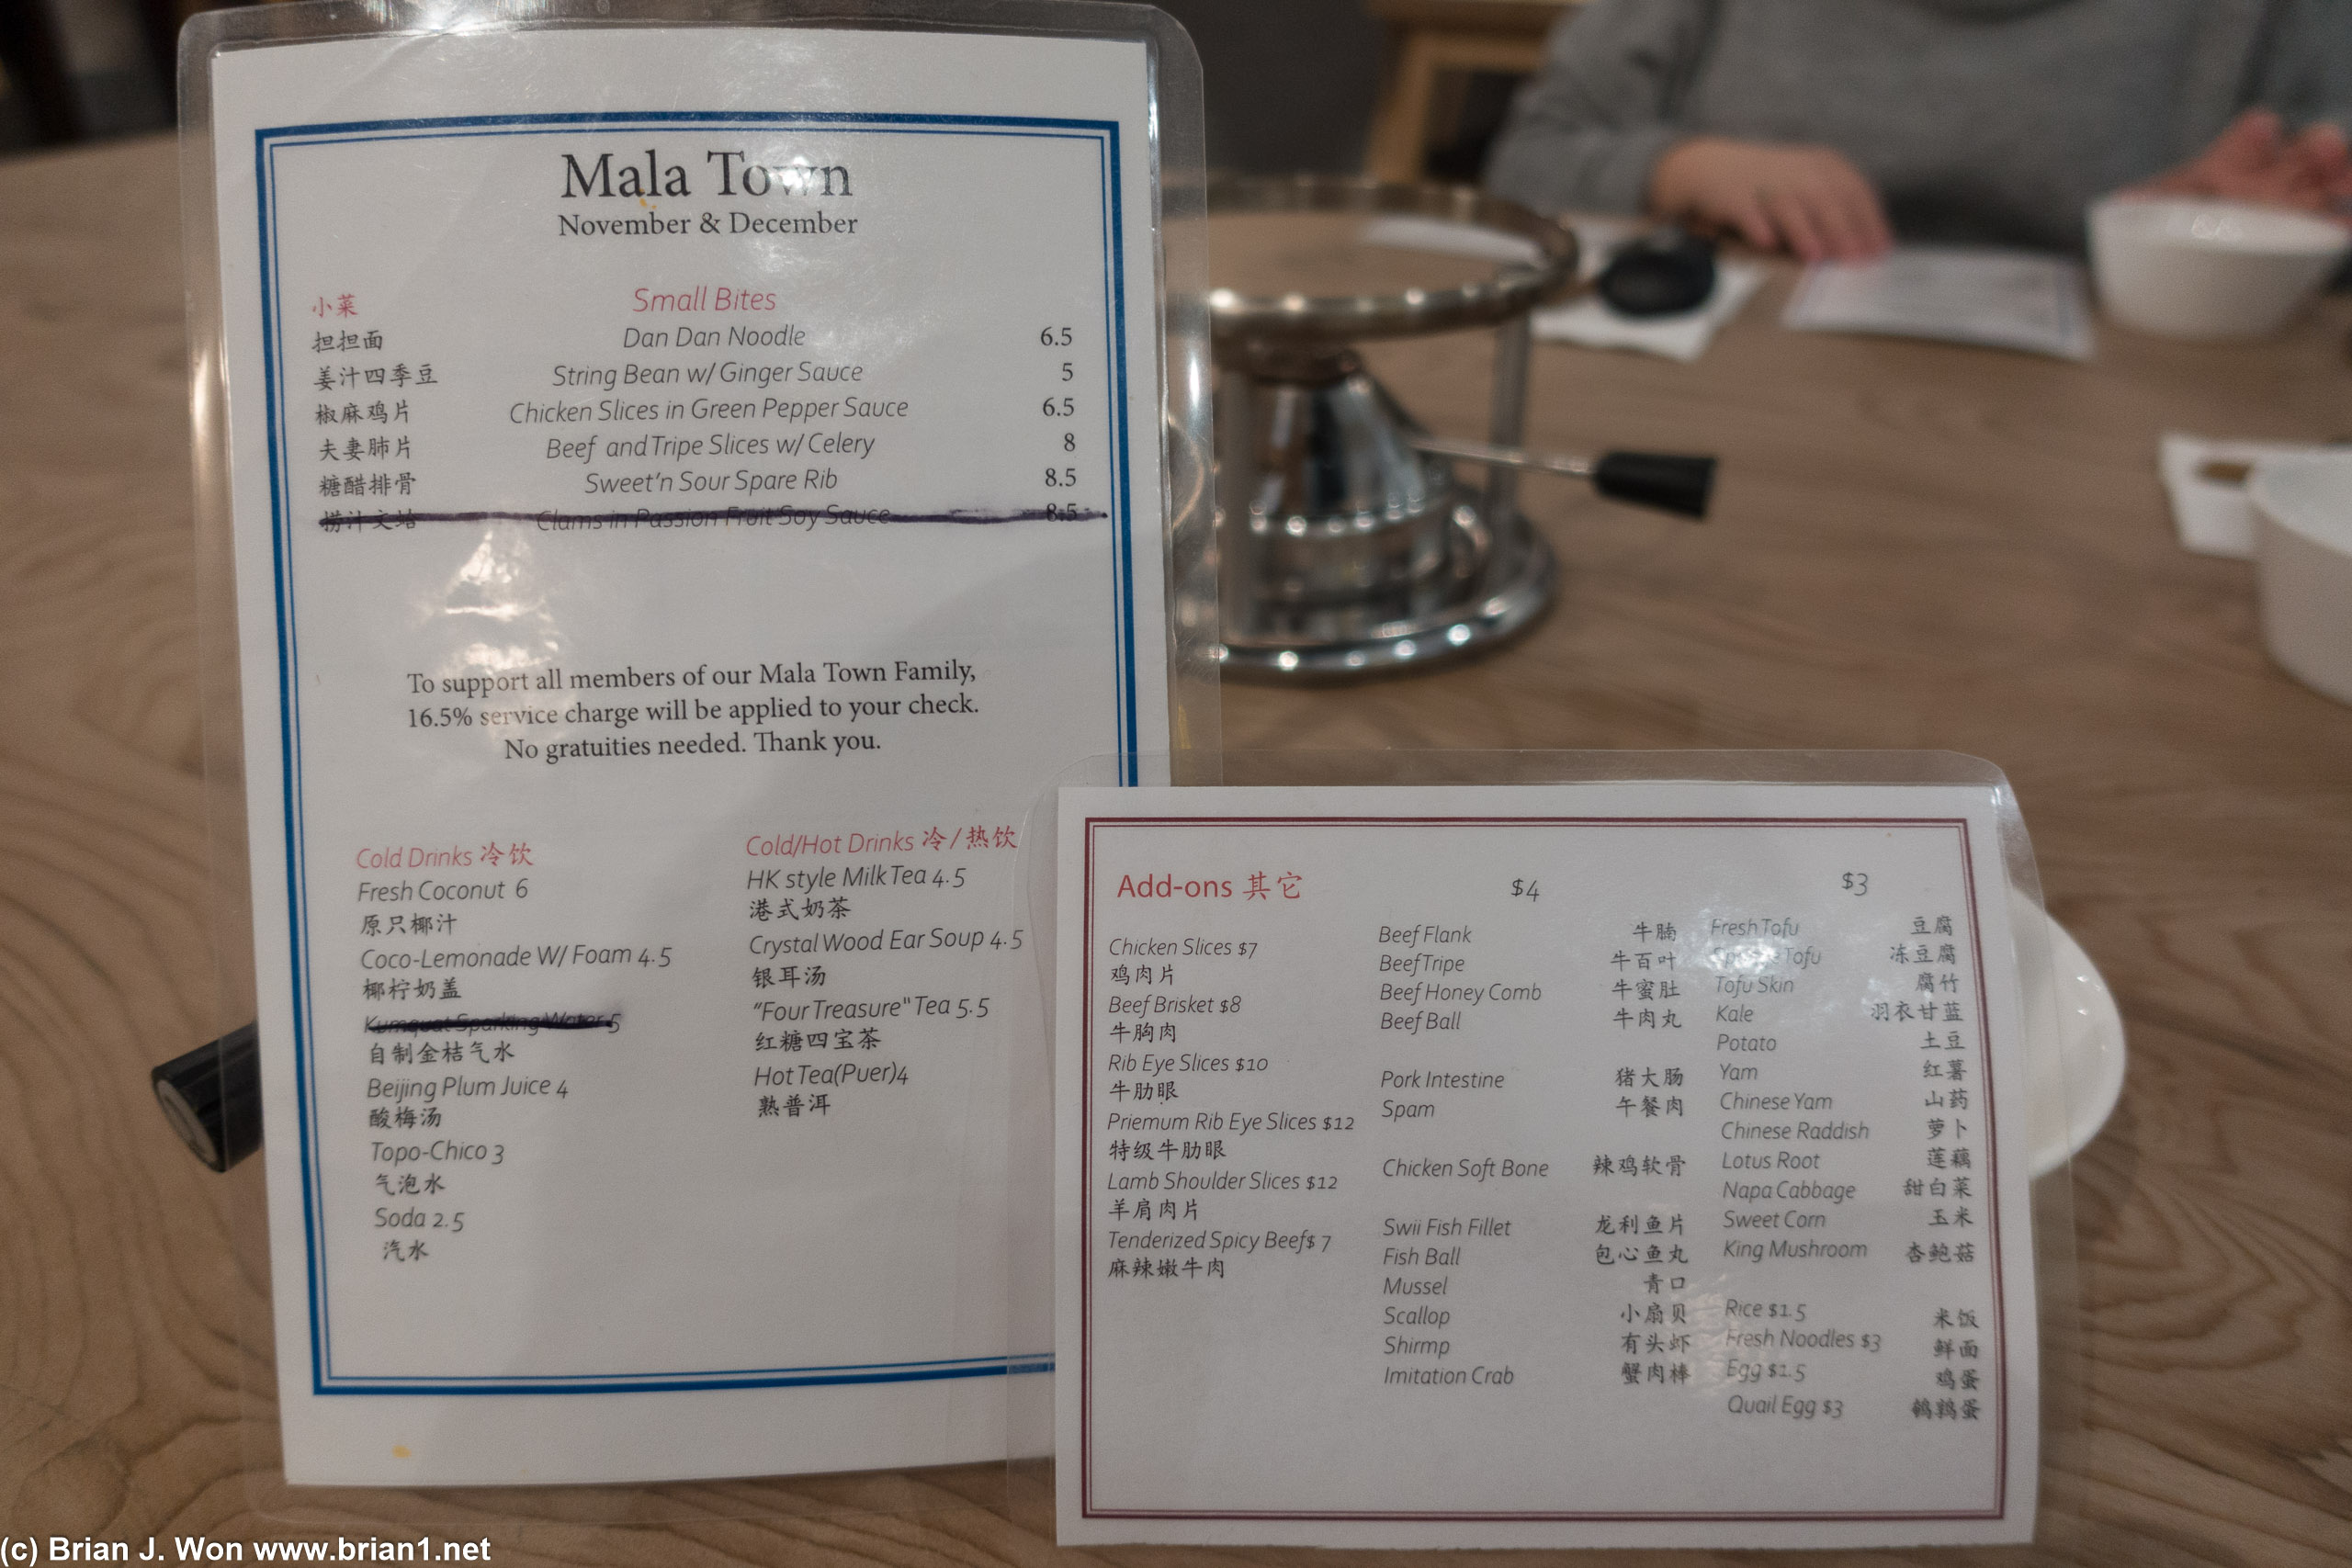 The menu.